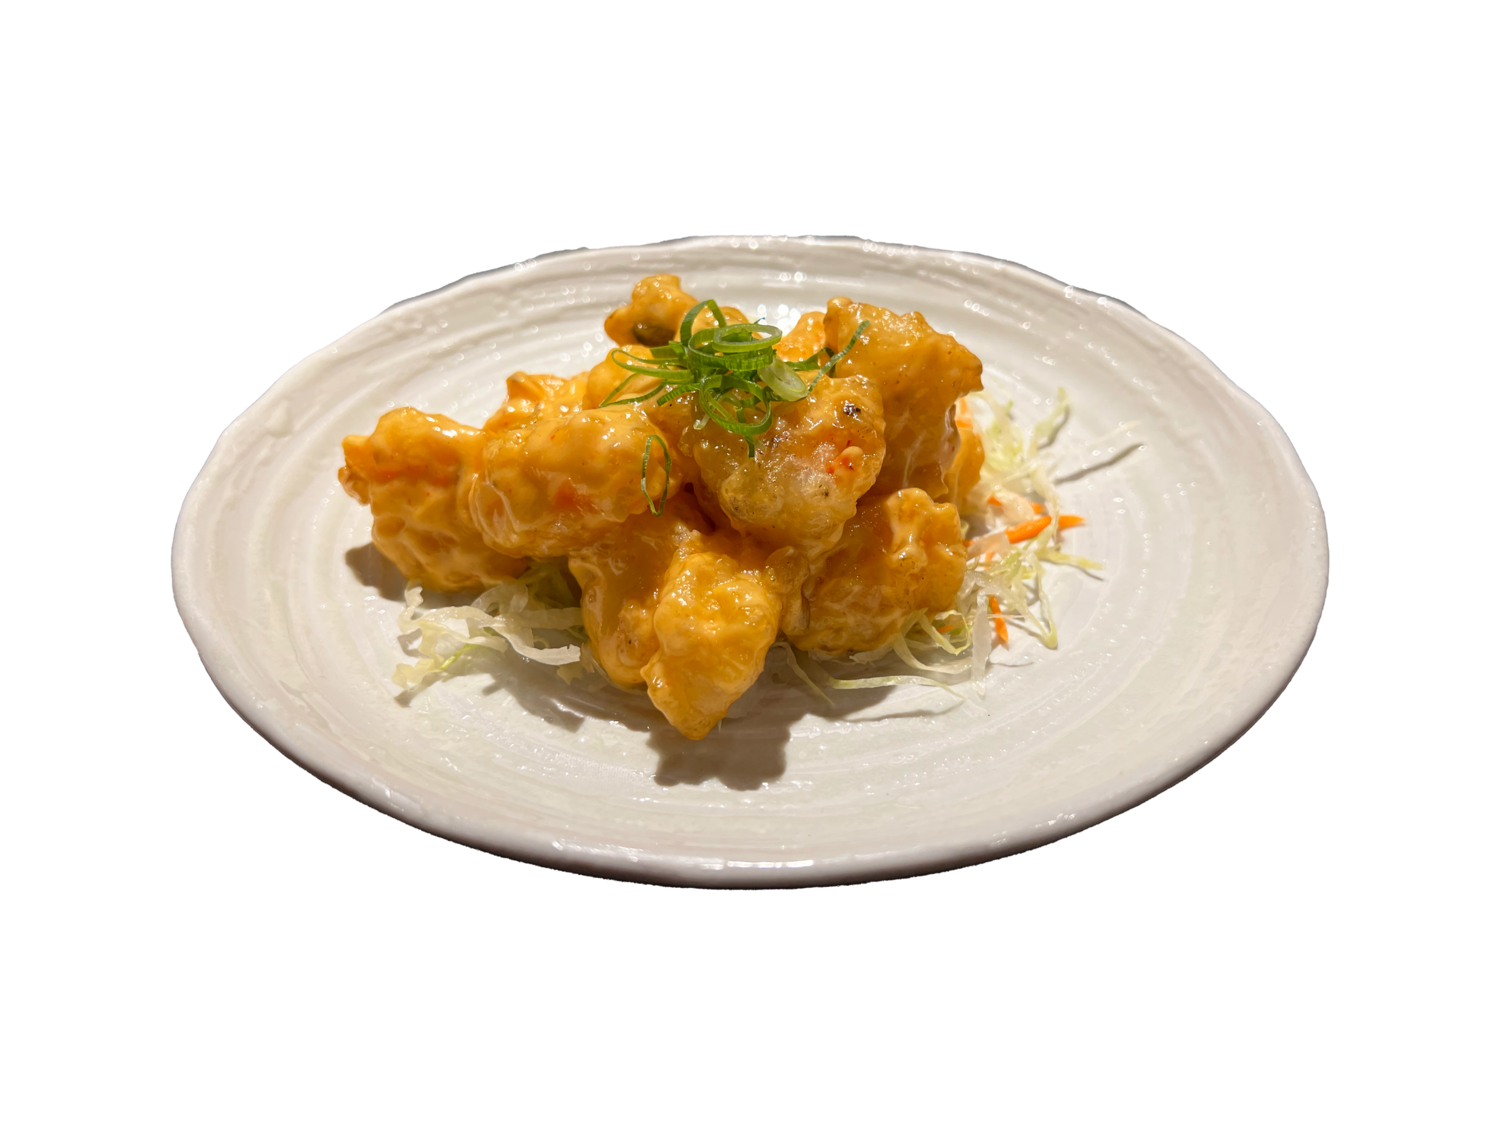 Creamy Spicy Shrimp: tigergarnalen | creamy spice saus | sjalot | spitskool